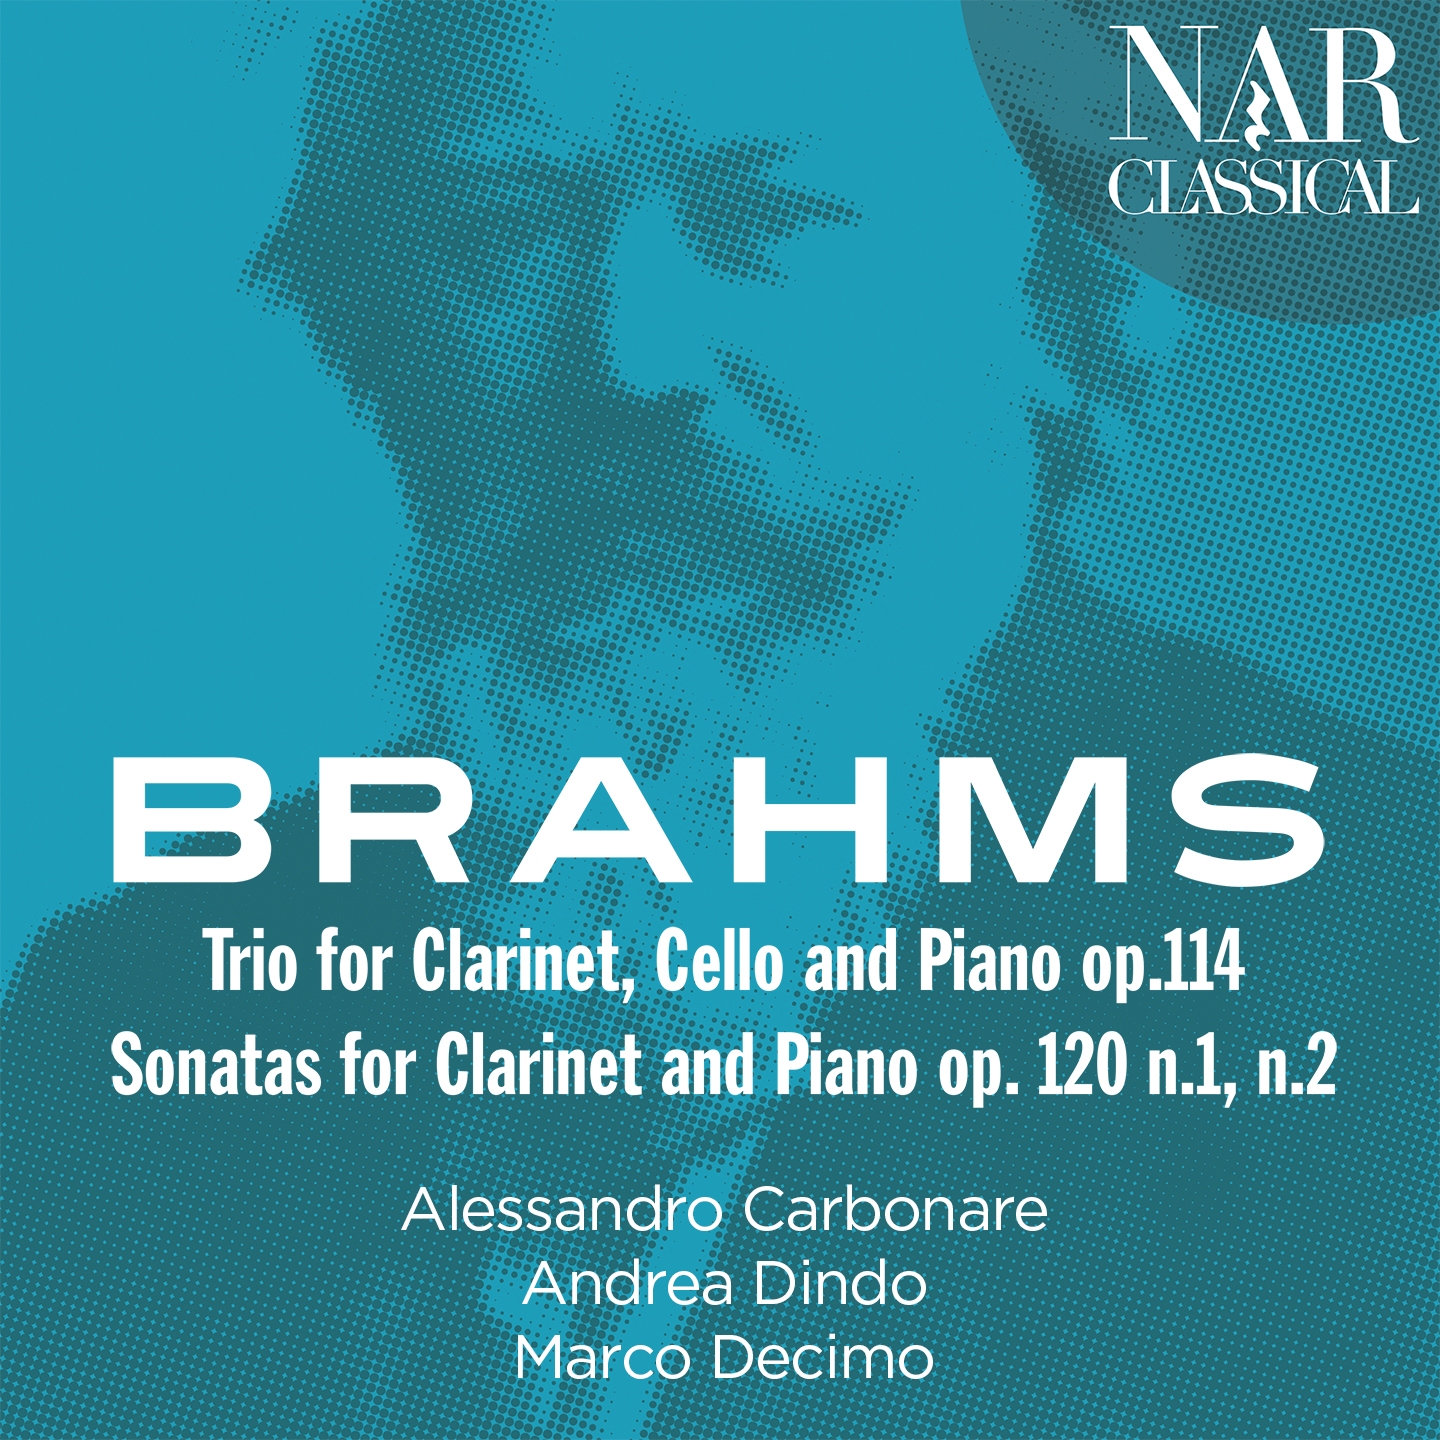 Clarinet Trio in A Minor, Op.114: II. Adagio